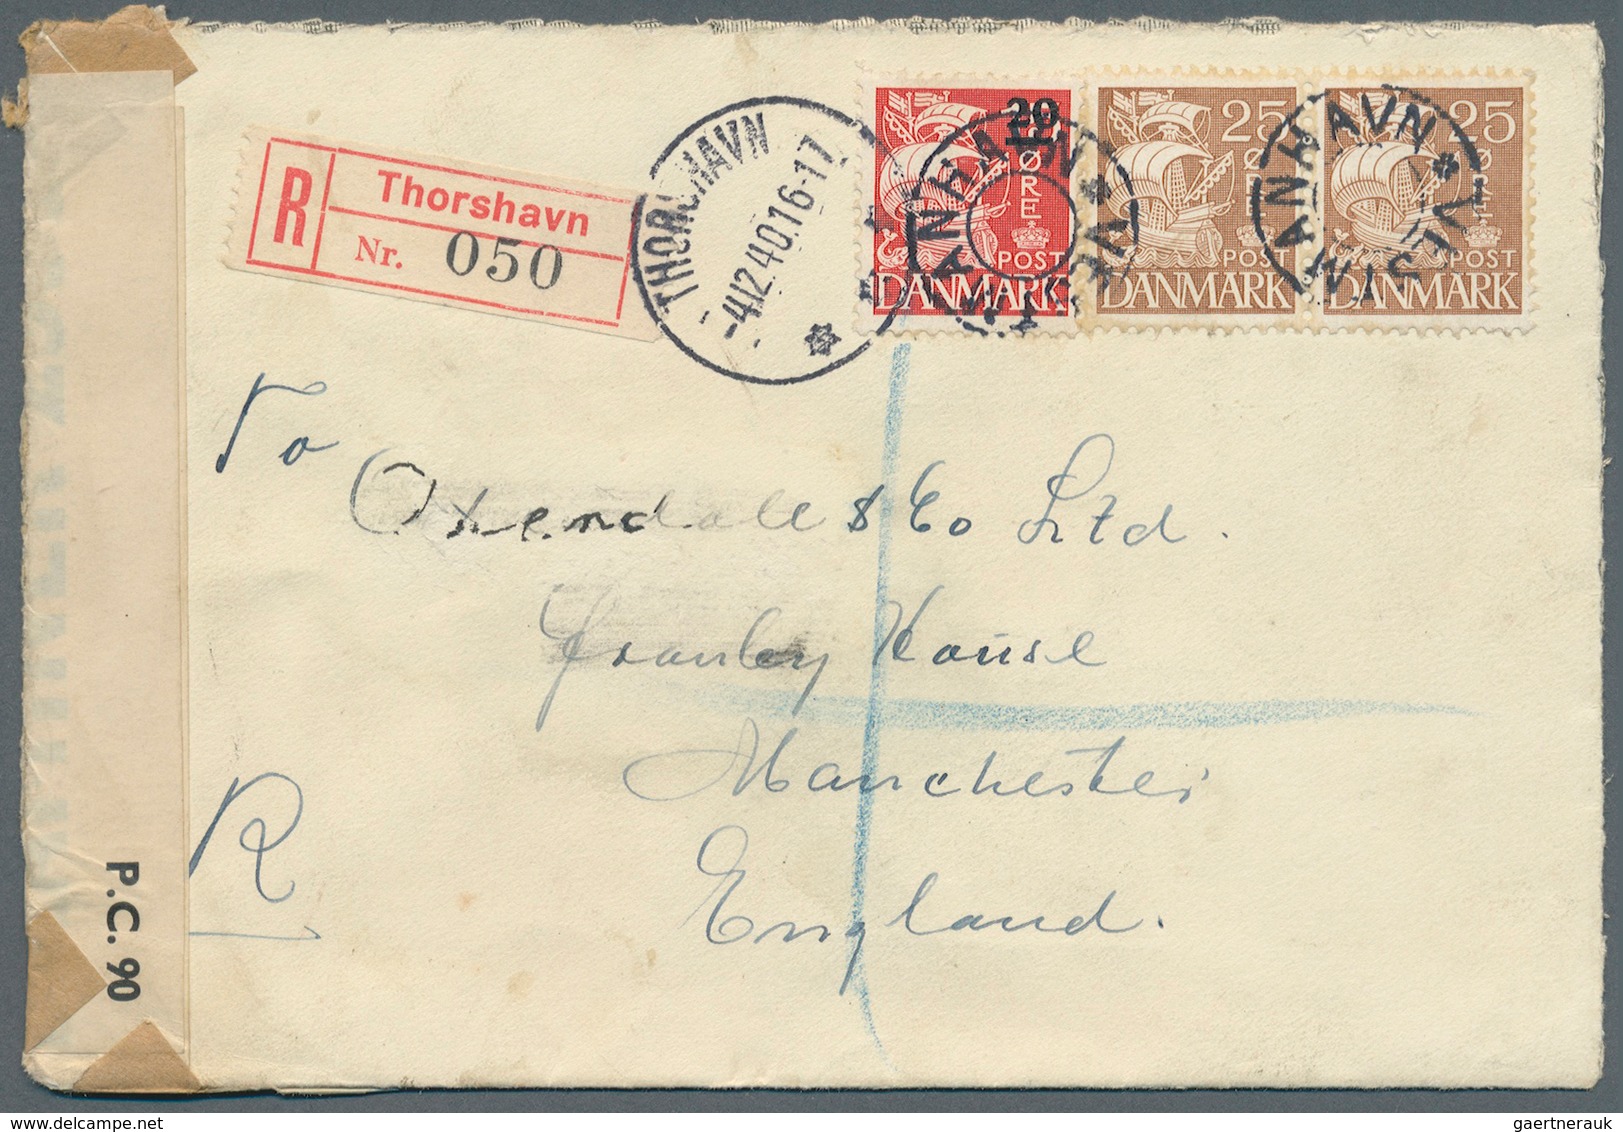 Dänemark - Färöer: 1940. Registered Envelope To Manchester Bearing Denmark Yvert 217, 25ø Brown (pai - Faroe Islands